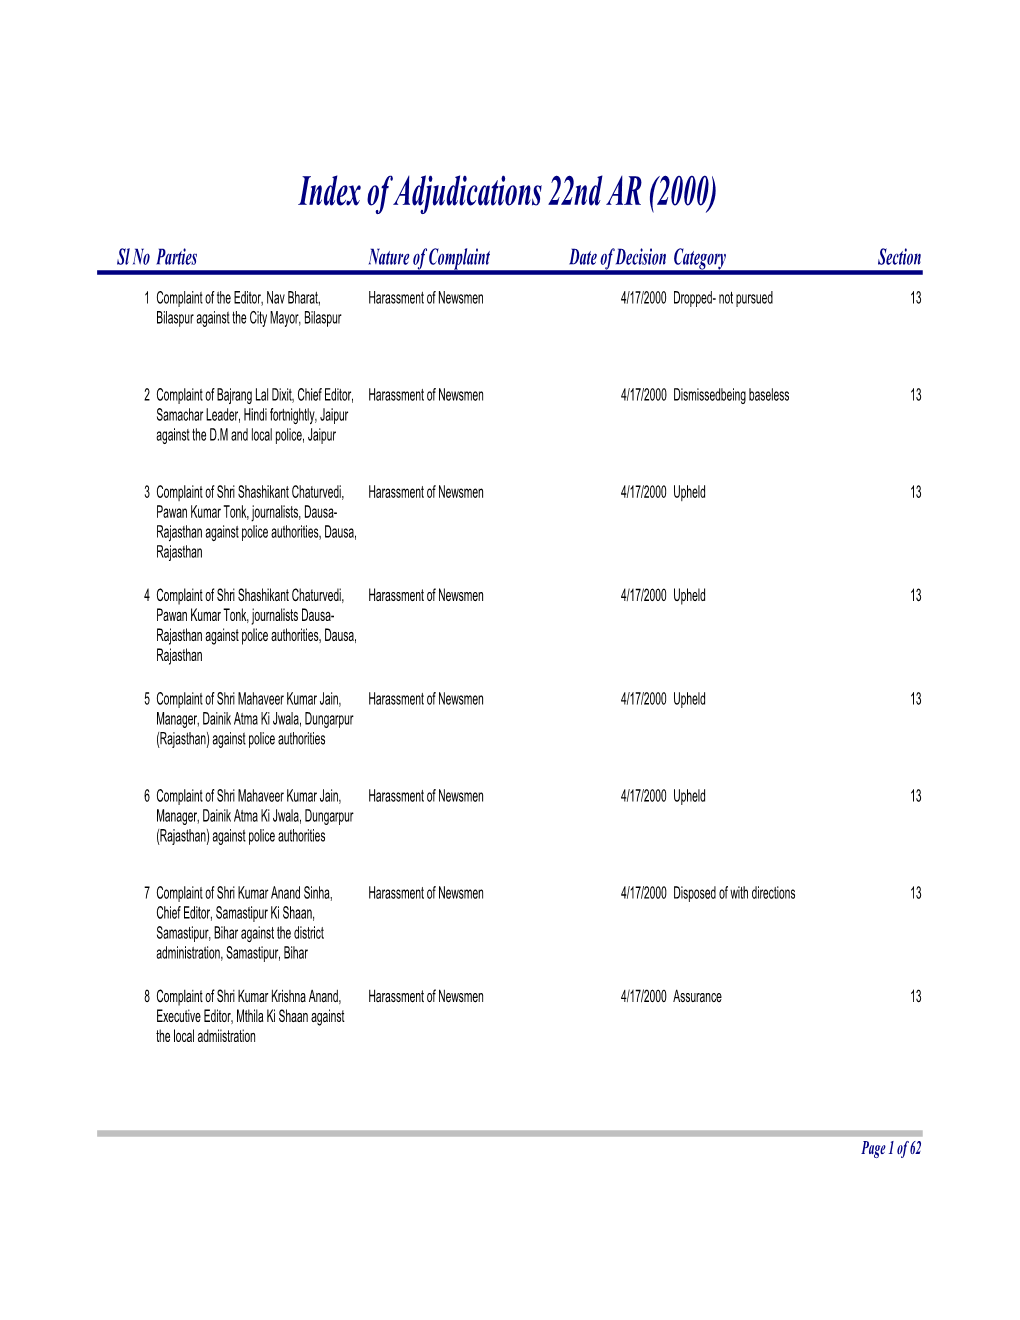 Index of Adjudications 22Nd AR (2000) (Updated)